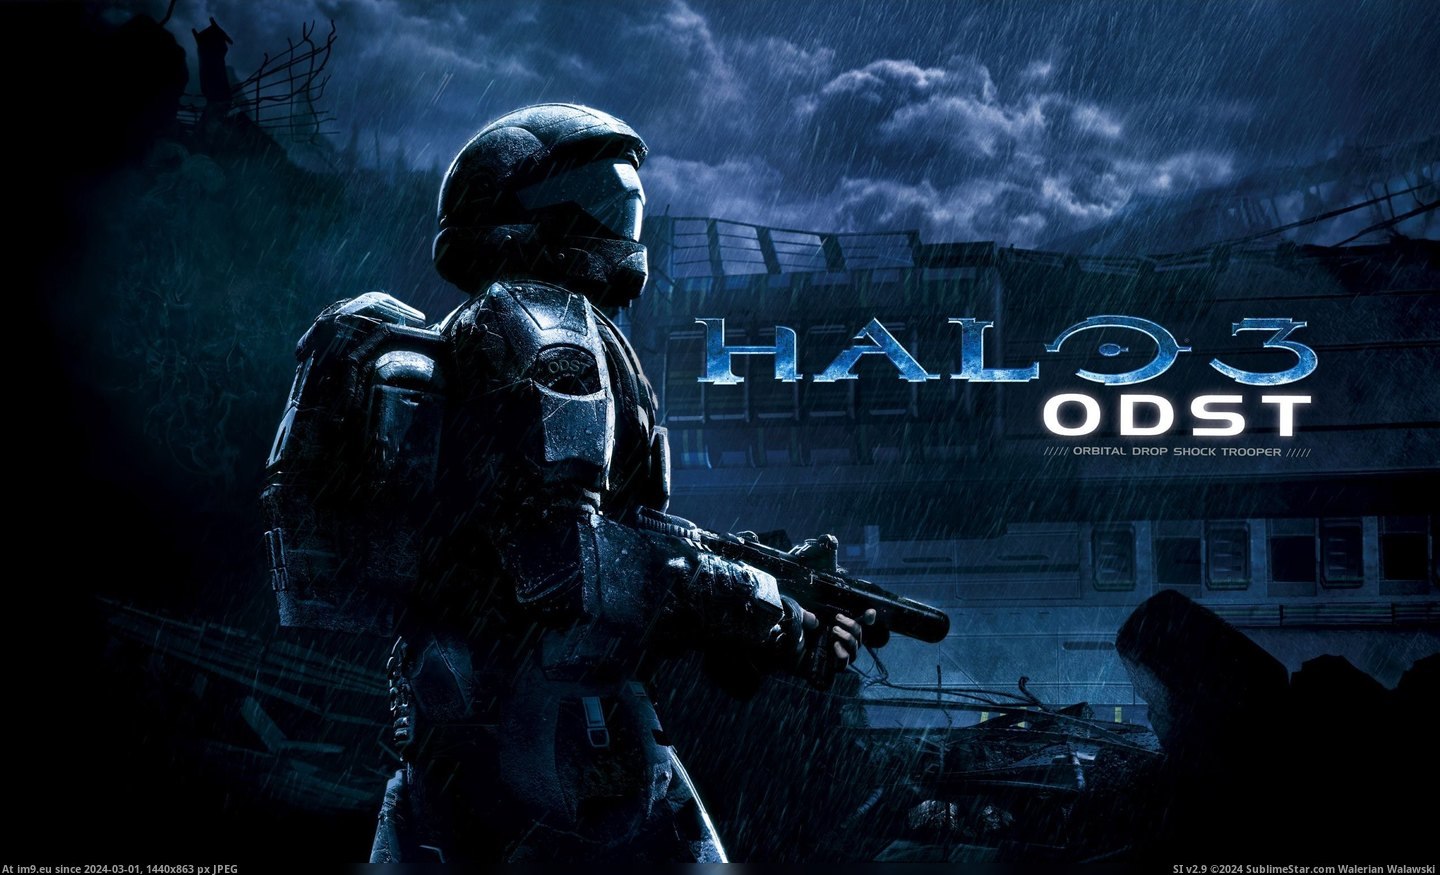 #Game #Halo #Video Video Game Halo 75123 Pic. (Bild von album Games Wallpapers))